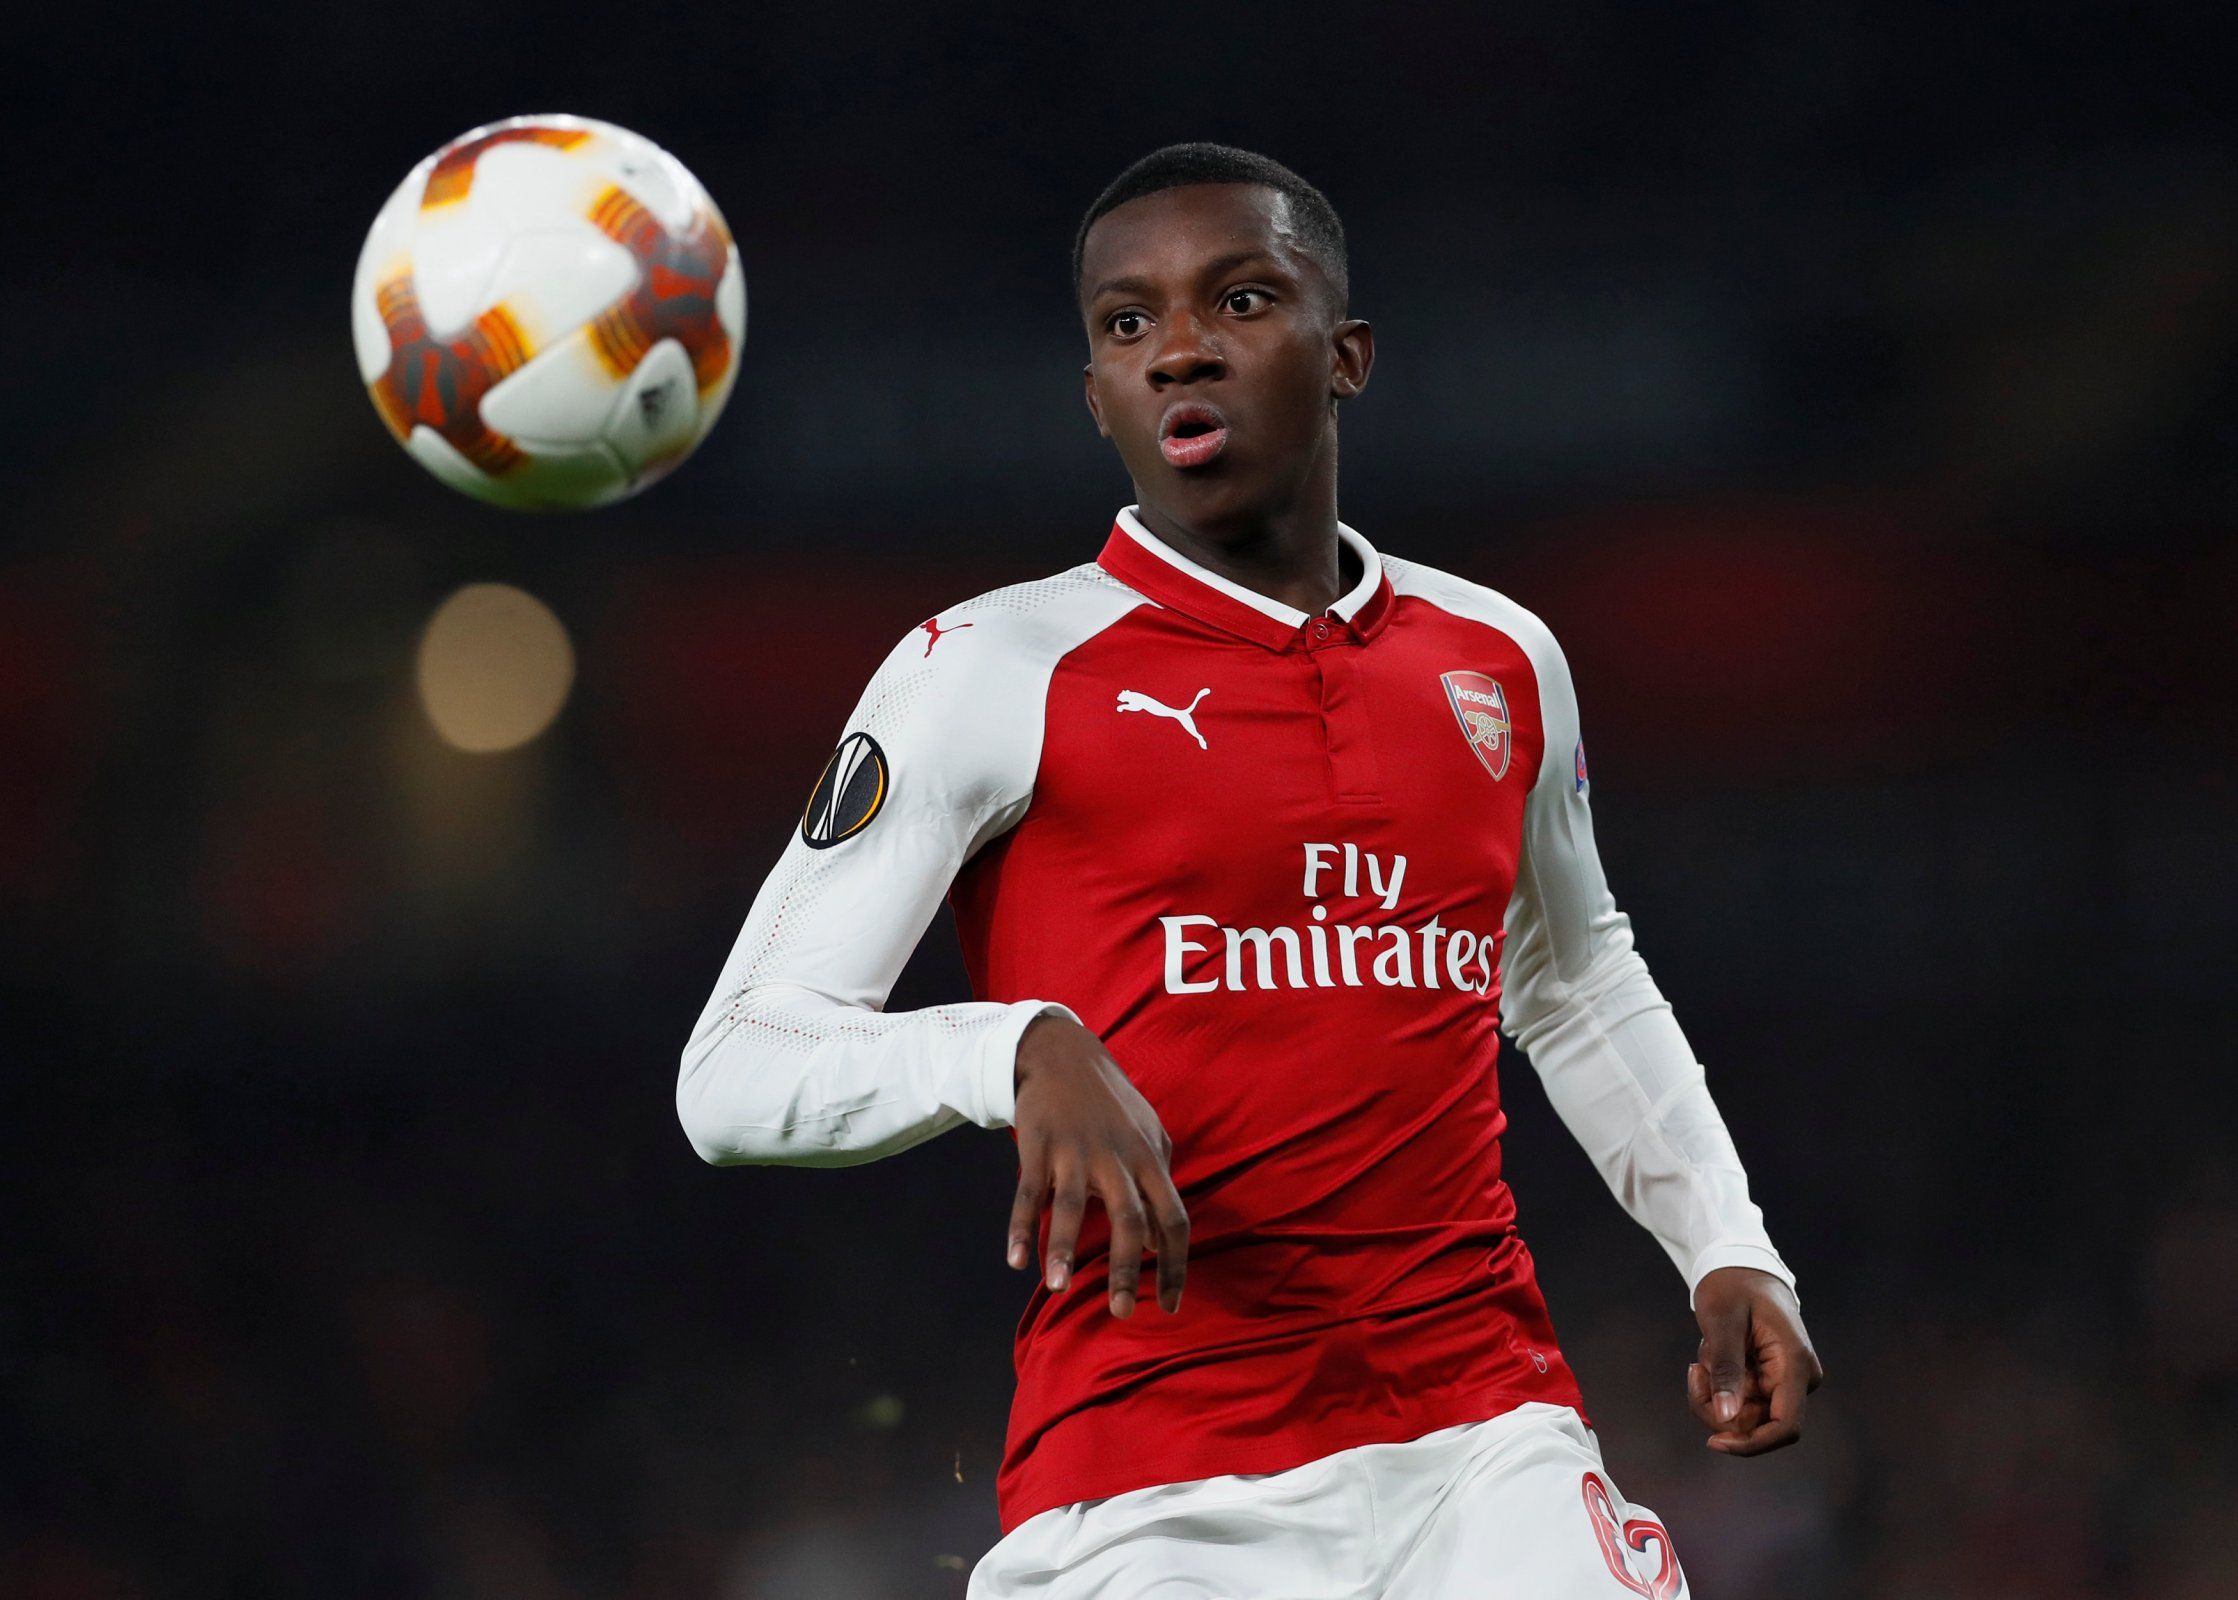 Eddie Nketiah in action for Arsenal